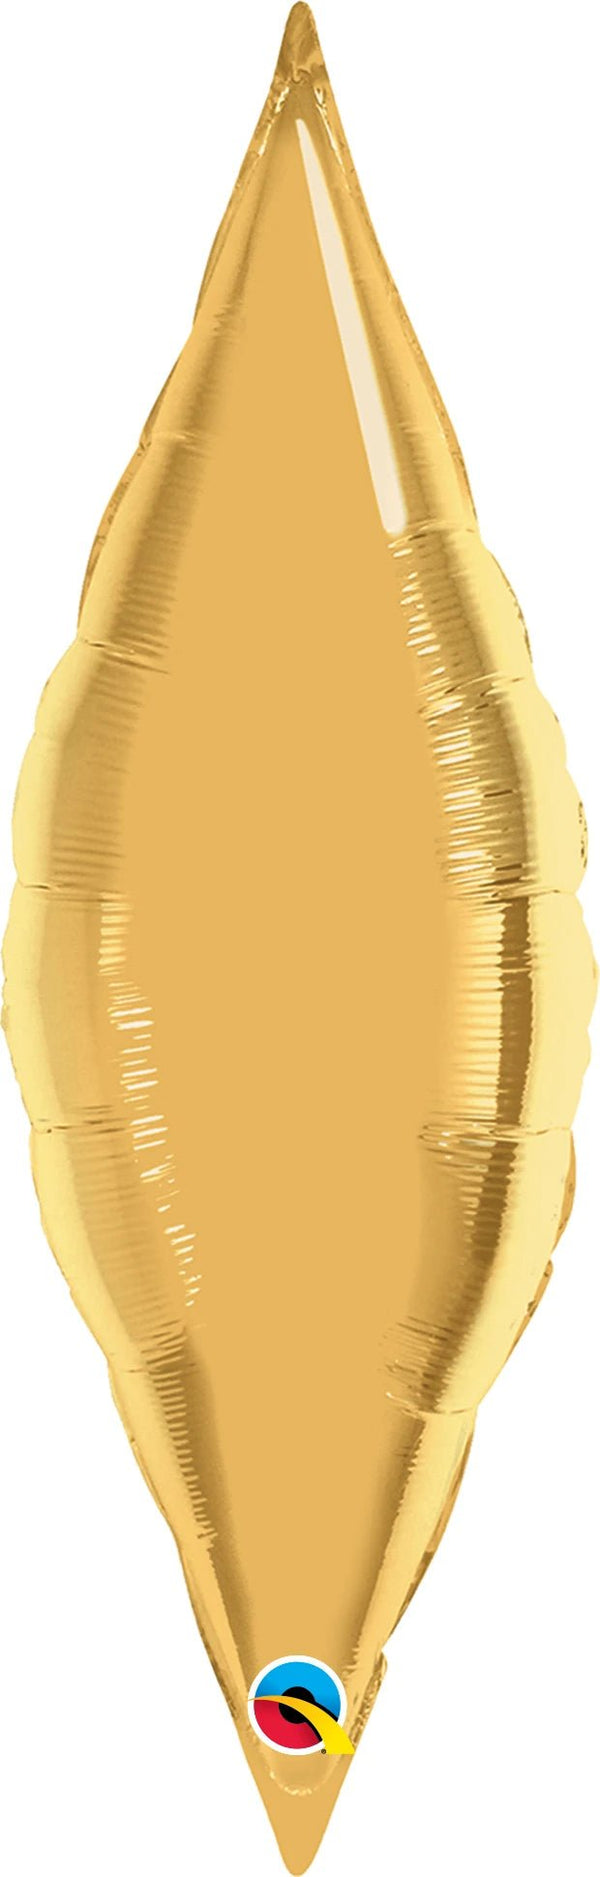 Foil Balloon Gold Taper 27inch - balloonsplaceusa